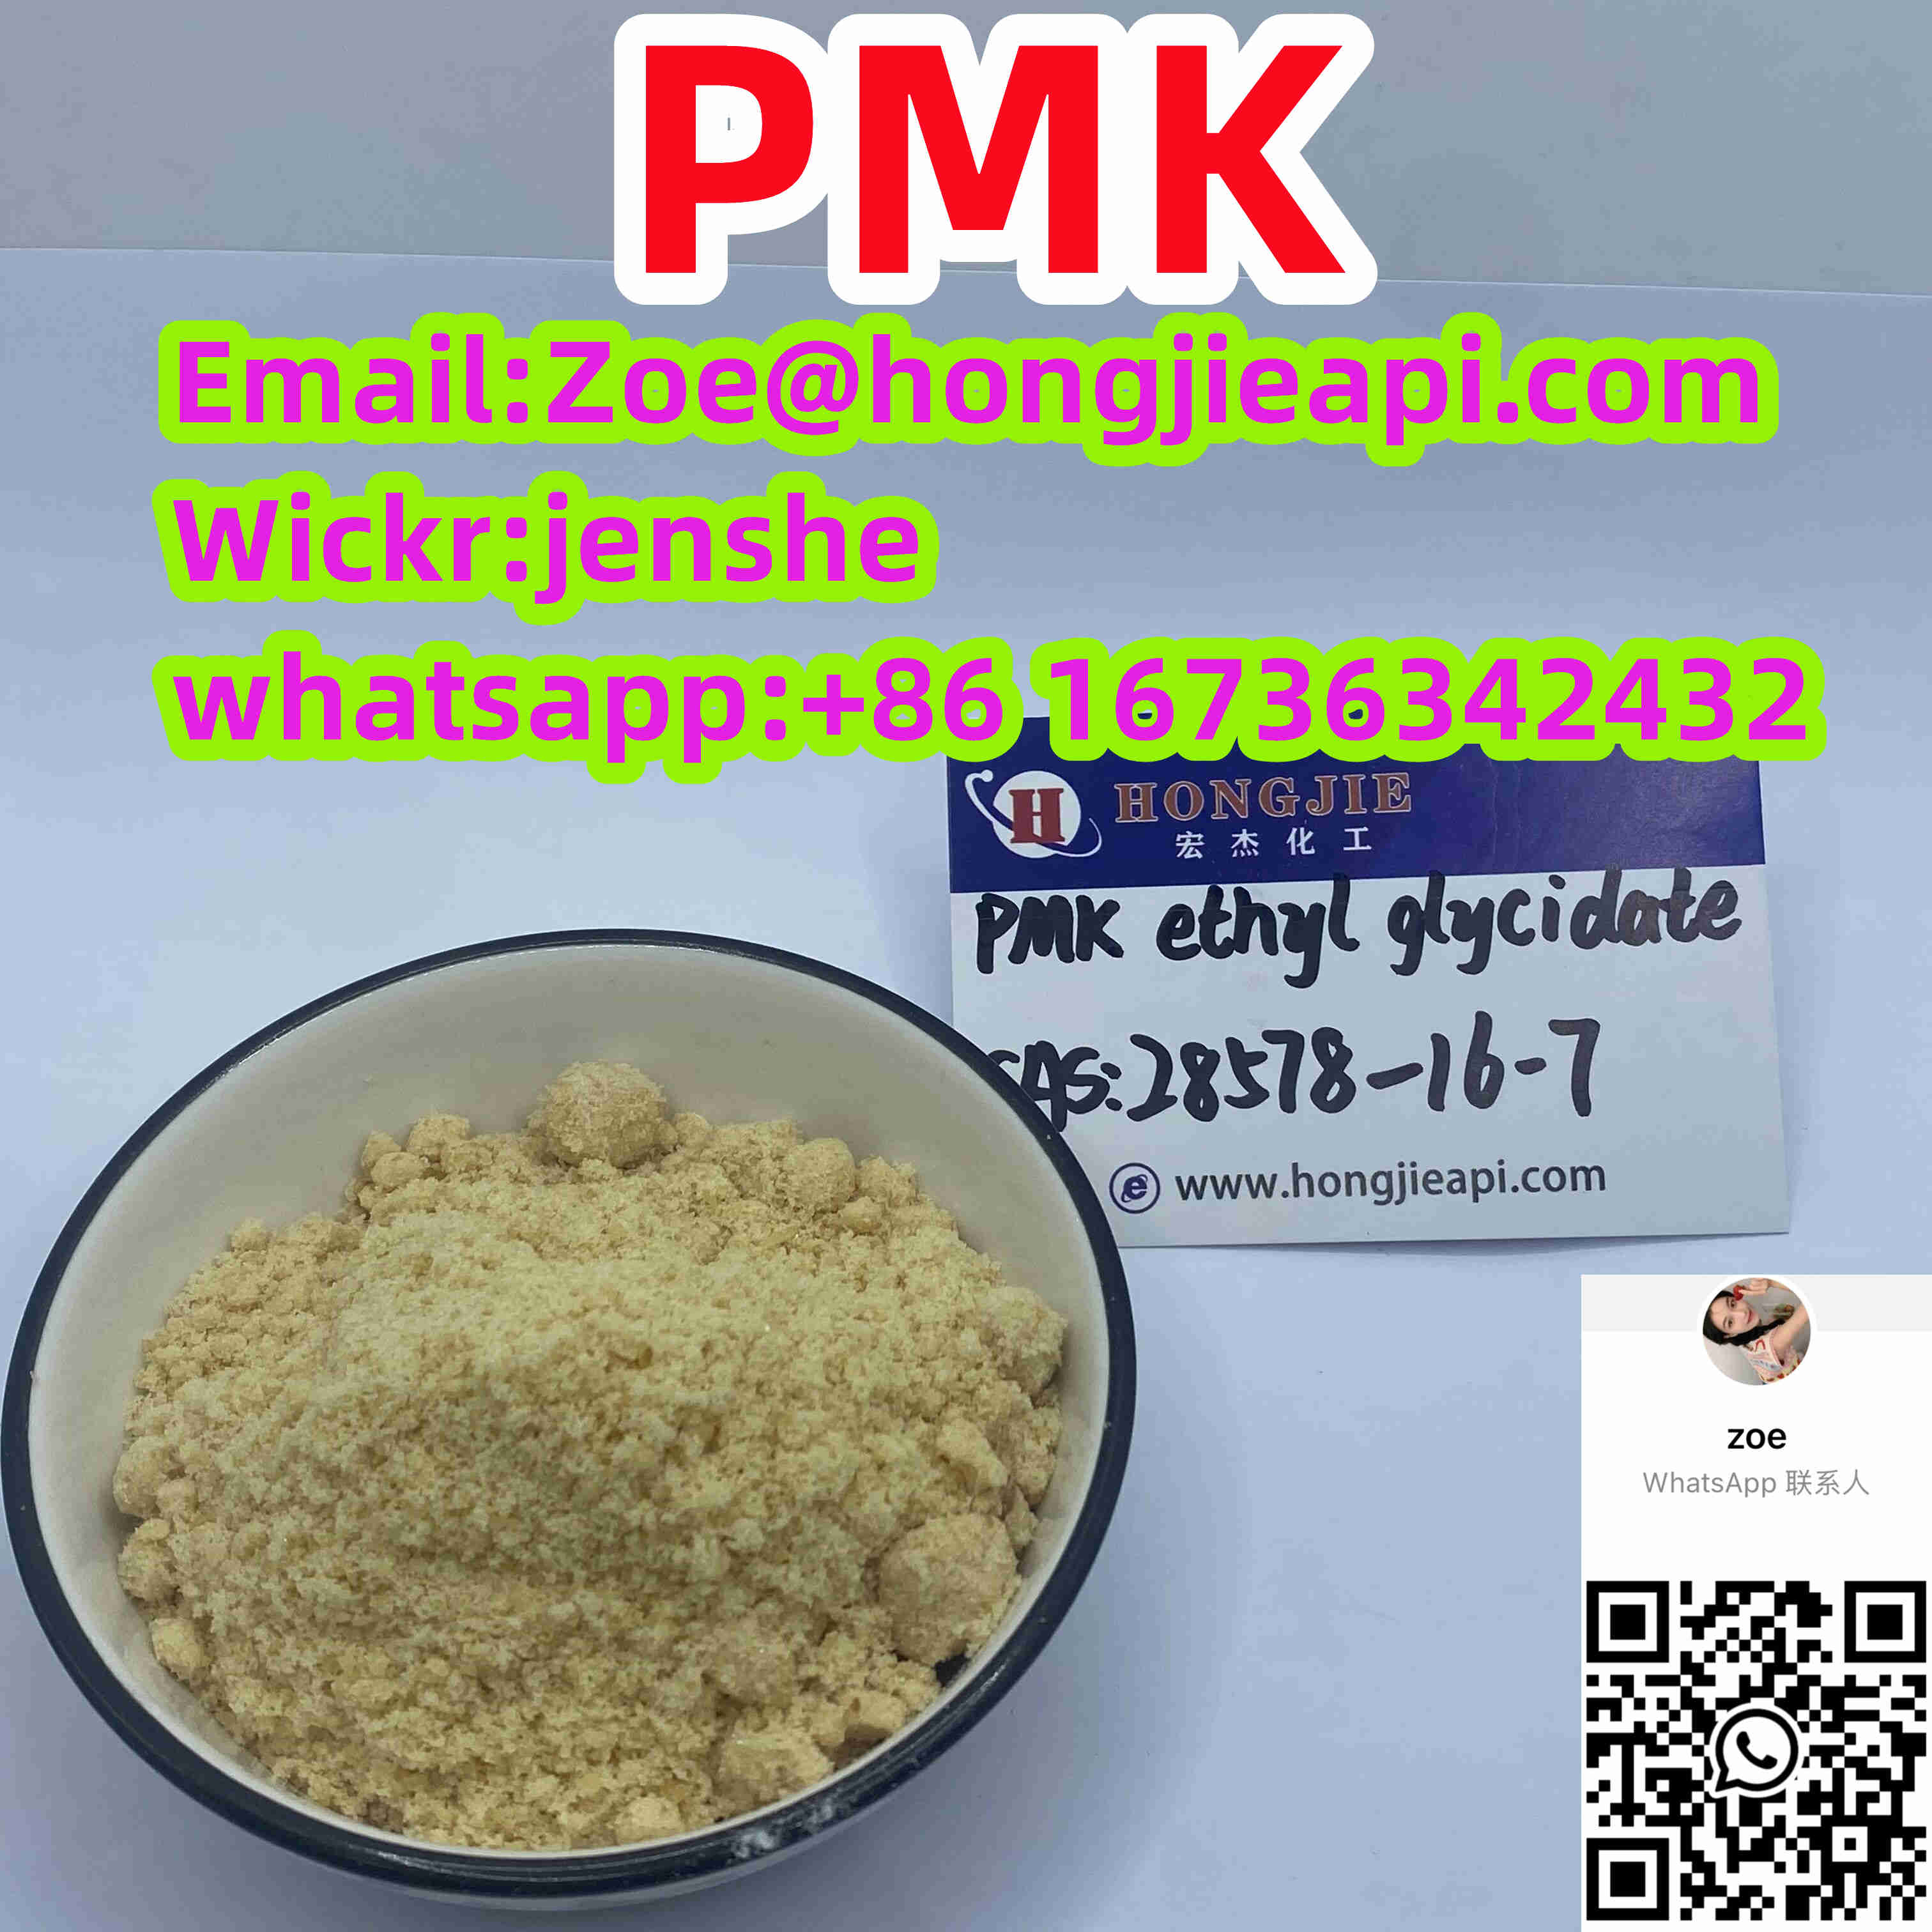 PMK ethyl glycidate 99% cas28578-16-7 with Factory Price